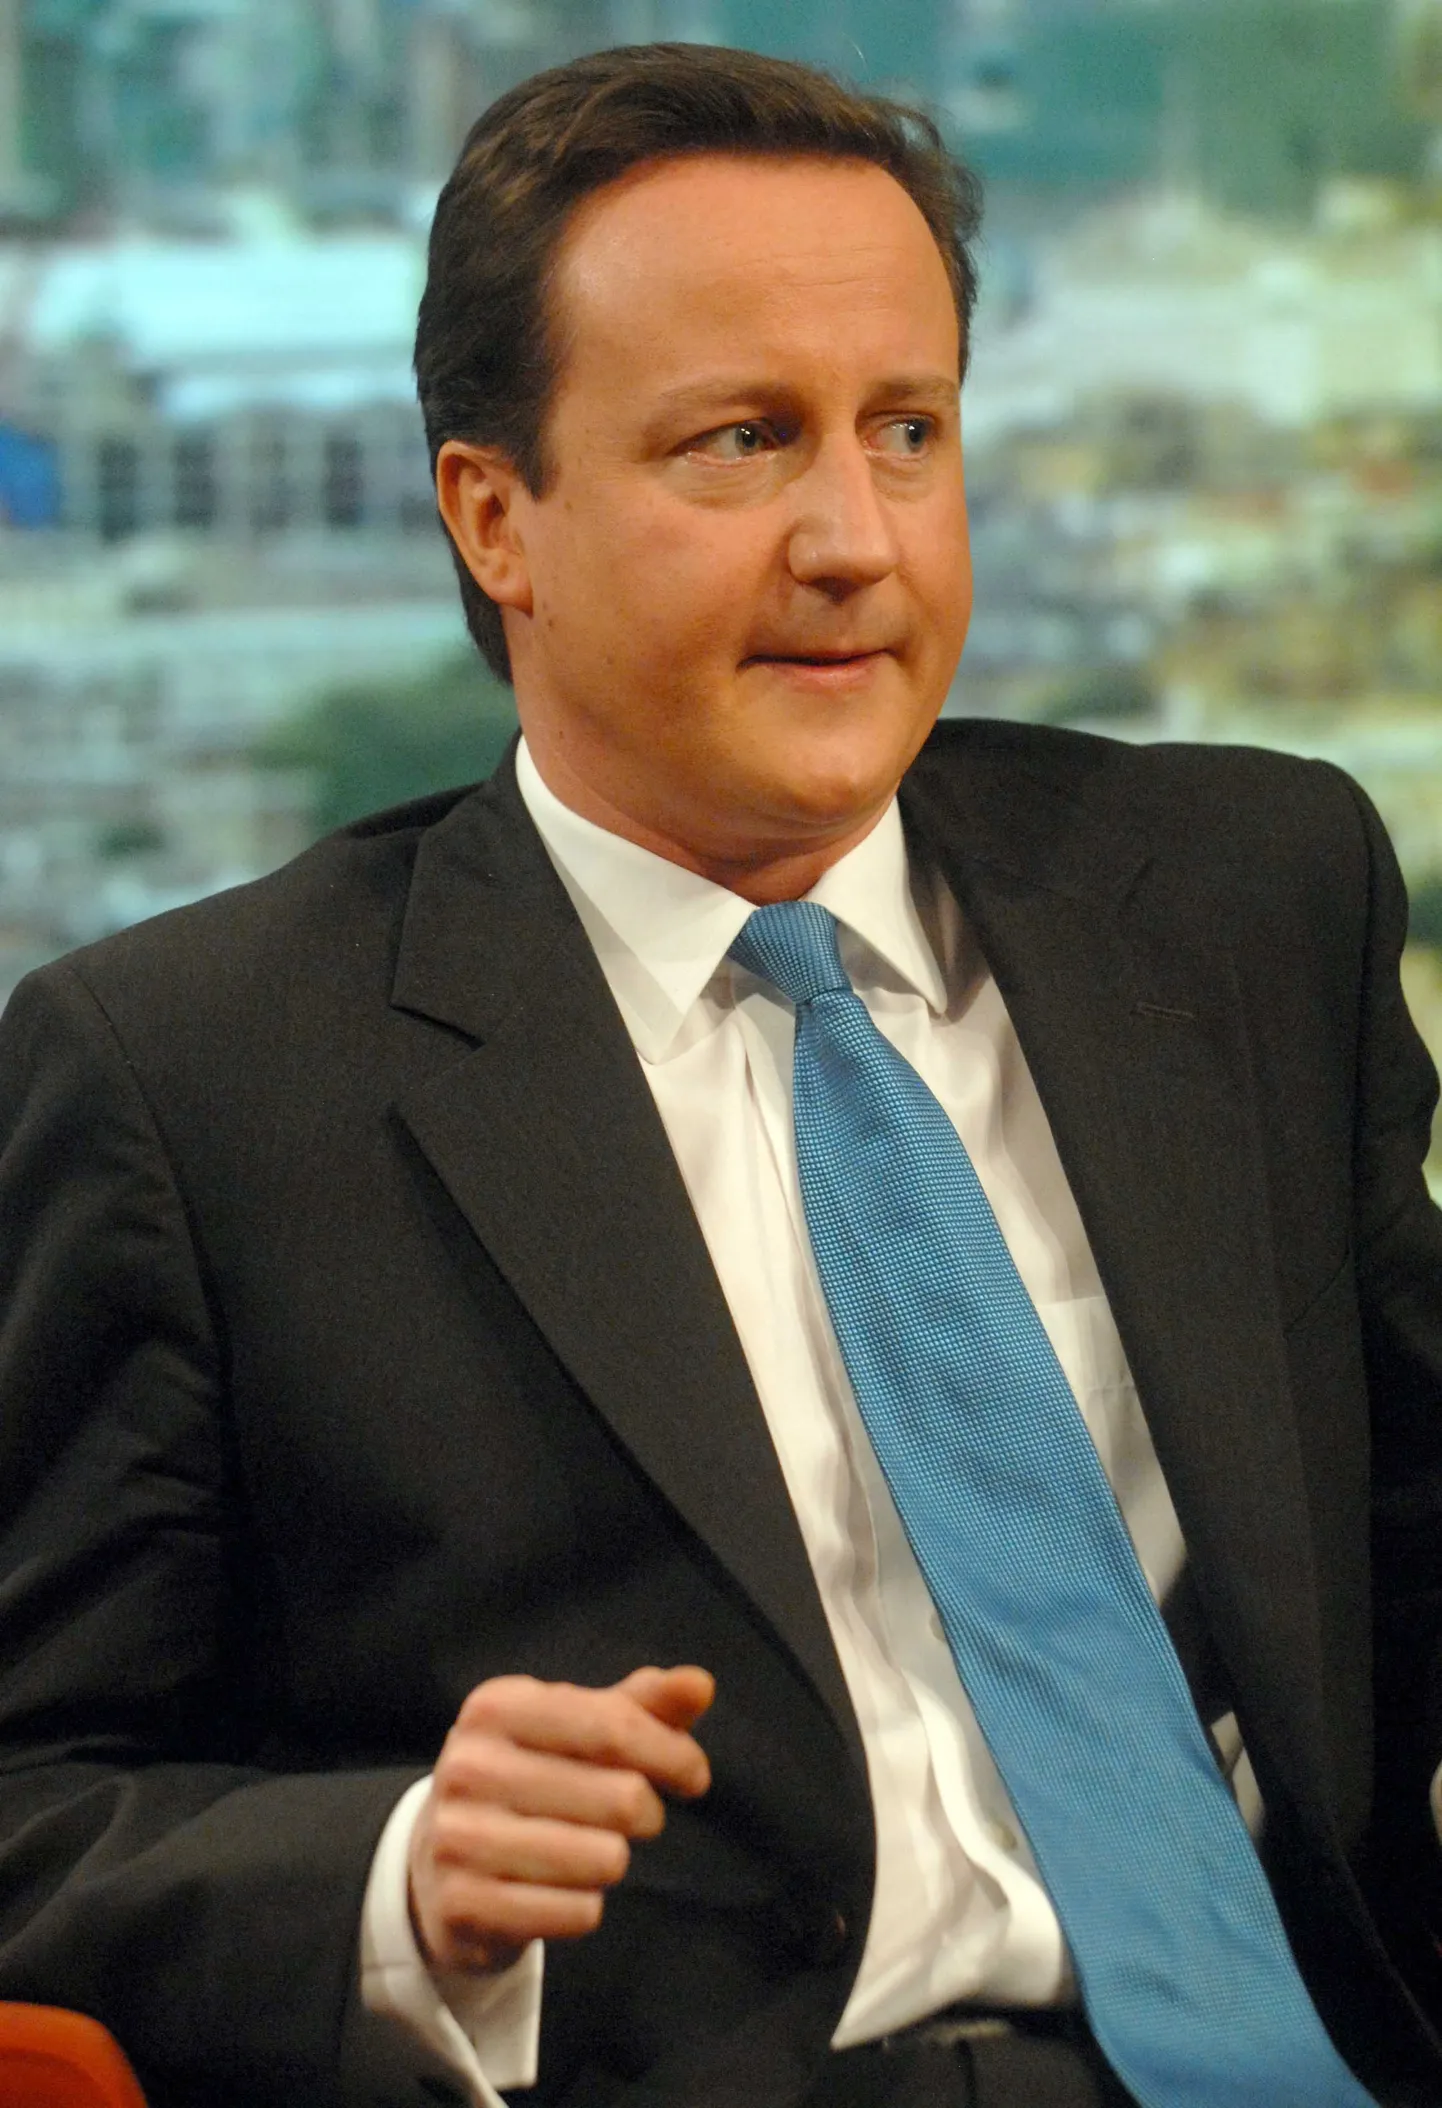 Briti konservatiivide juht David Cameron